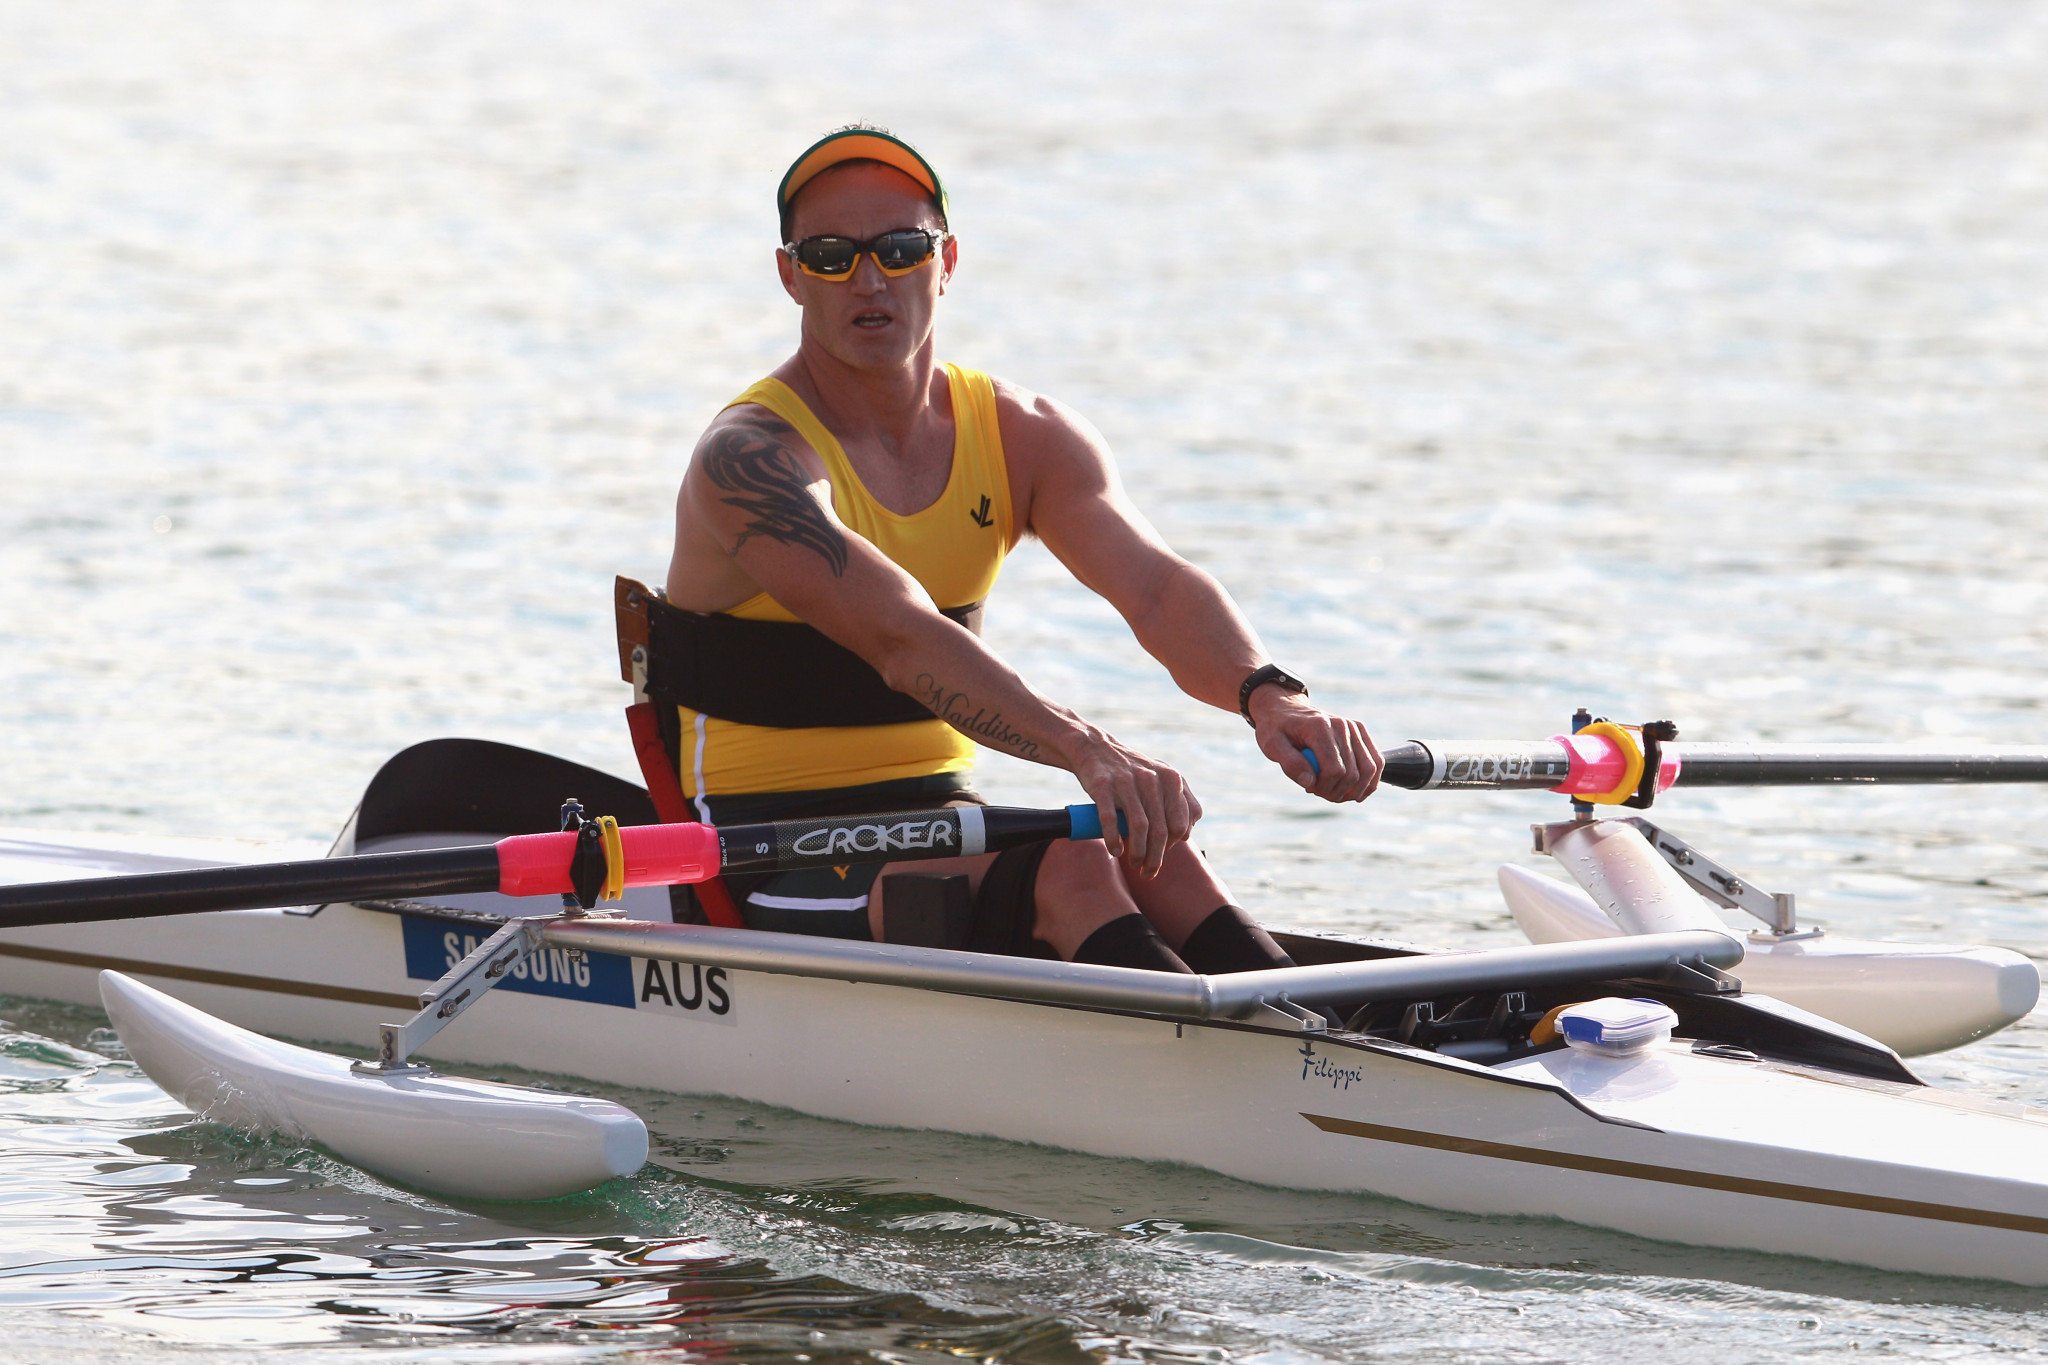 Australian rower Horrie among IPC Allianz Athlete of the Month nominees for September 